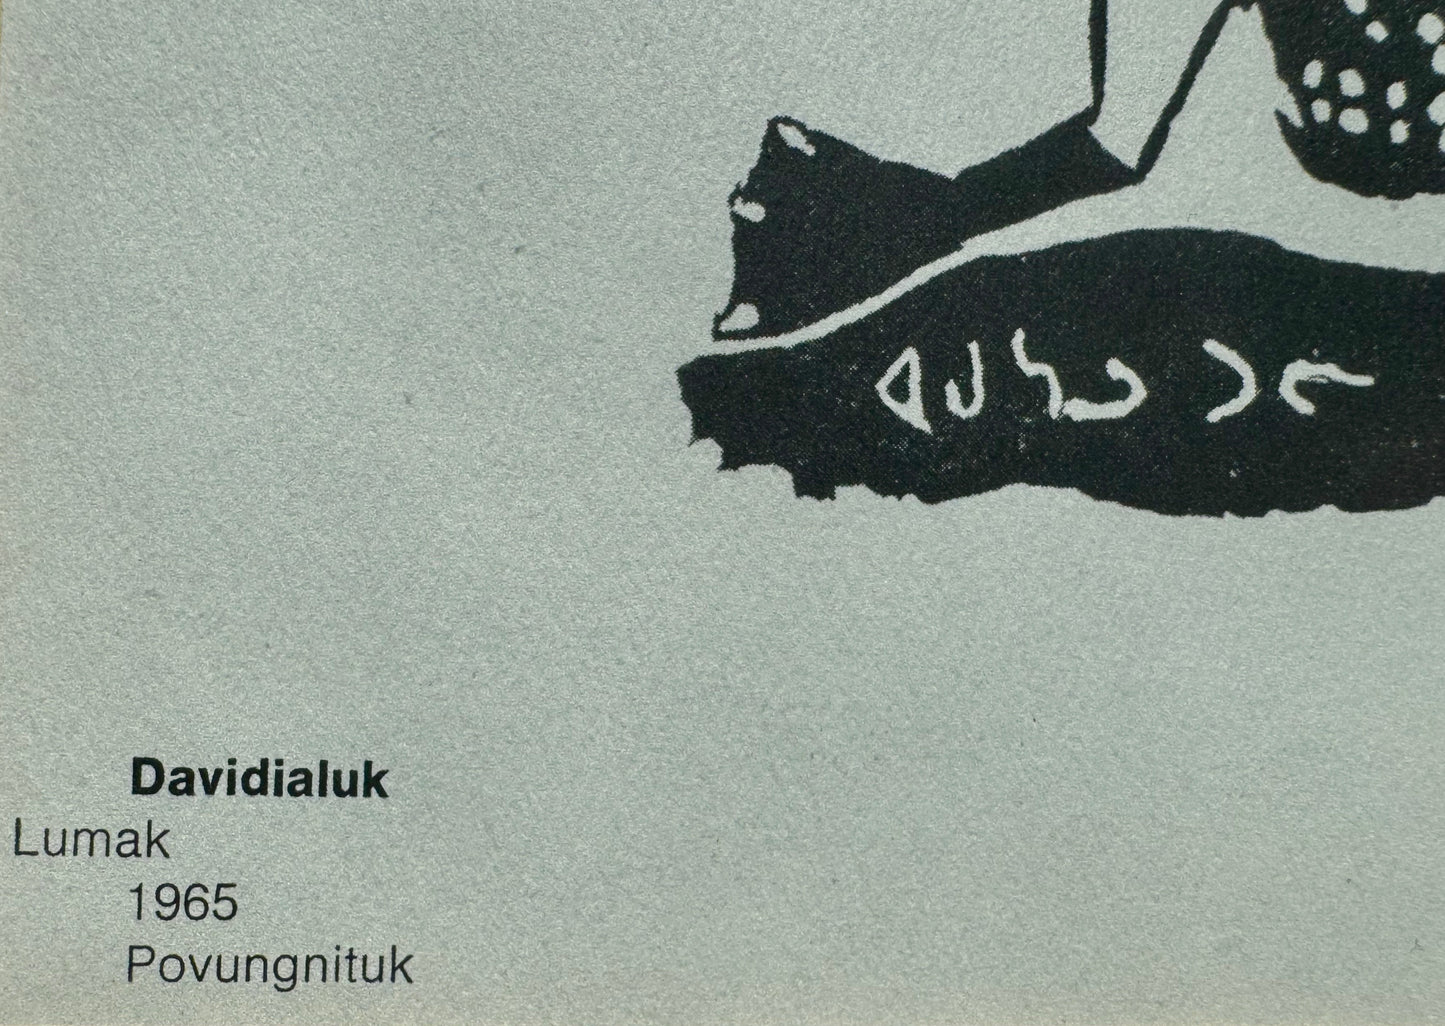 LUMAK - Davidialuk 1965 - Povungnituk - Collection Inuit